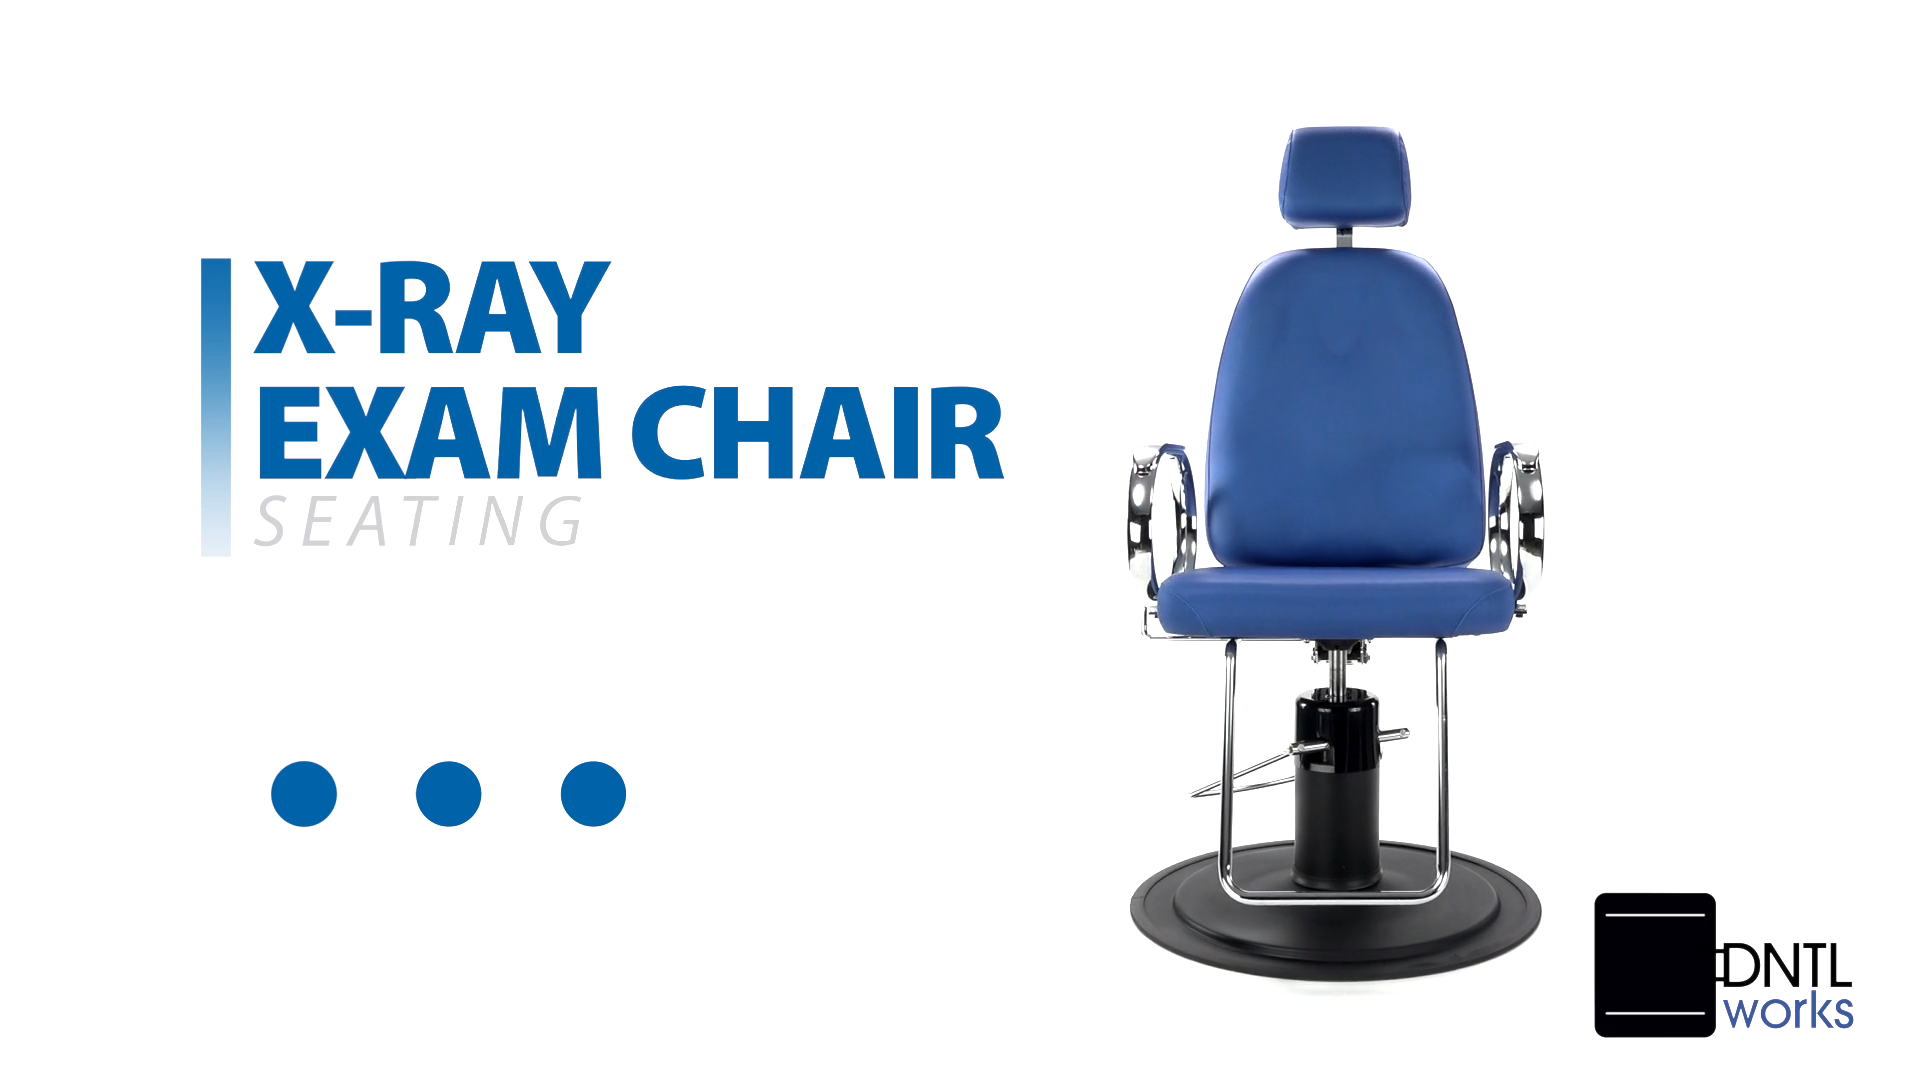 X-Ray Exam Chair